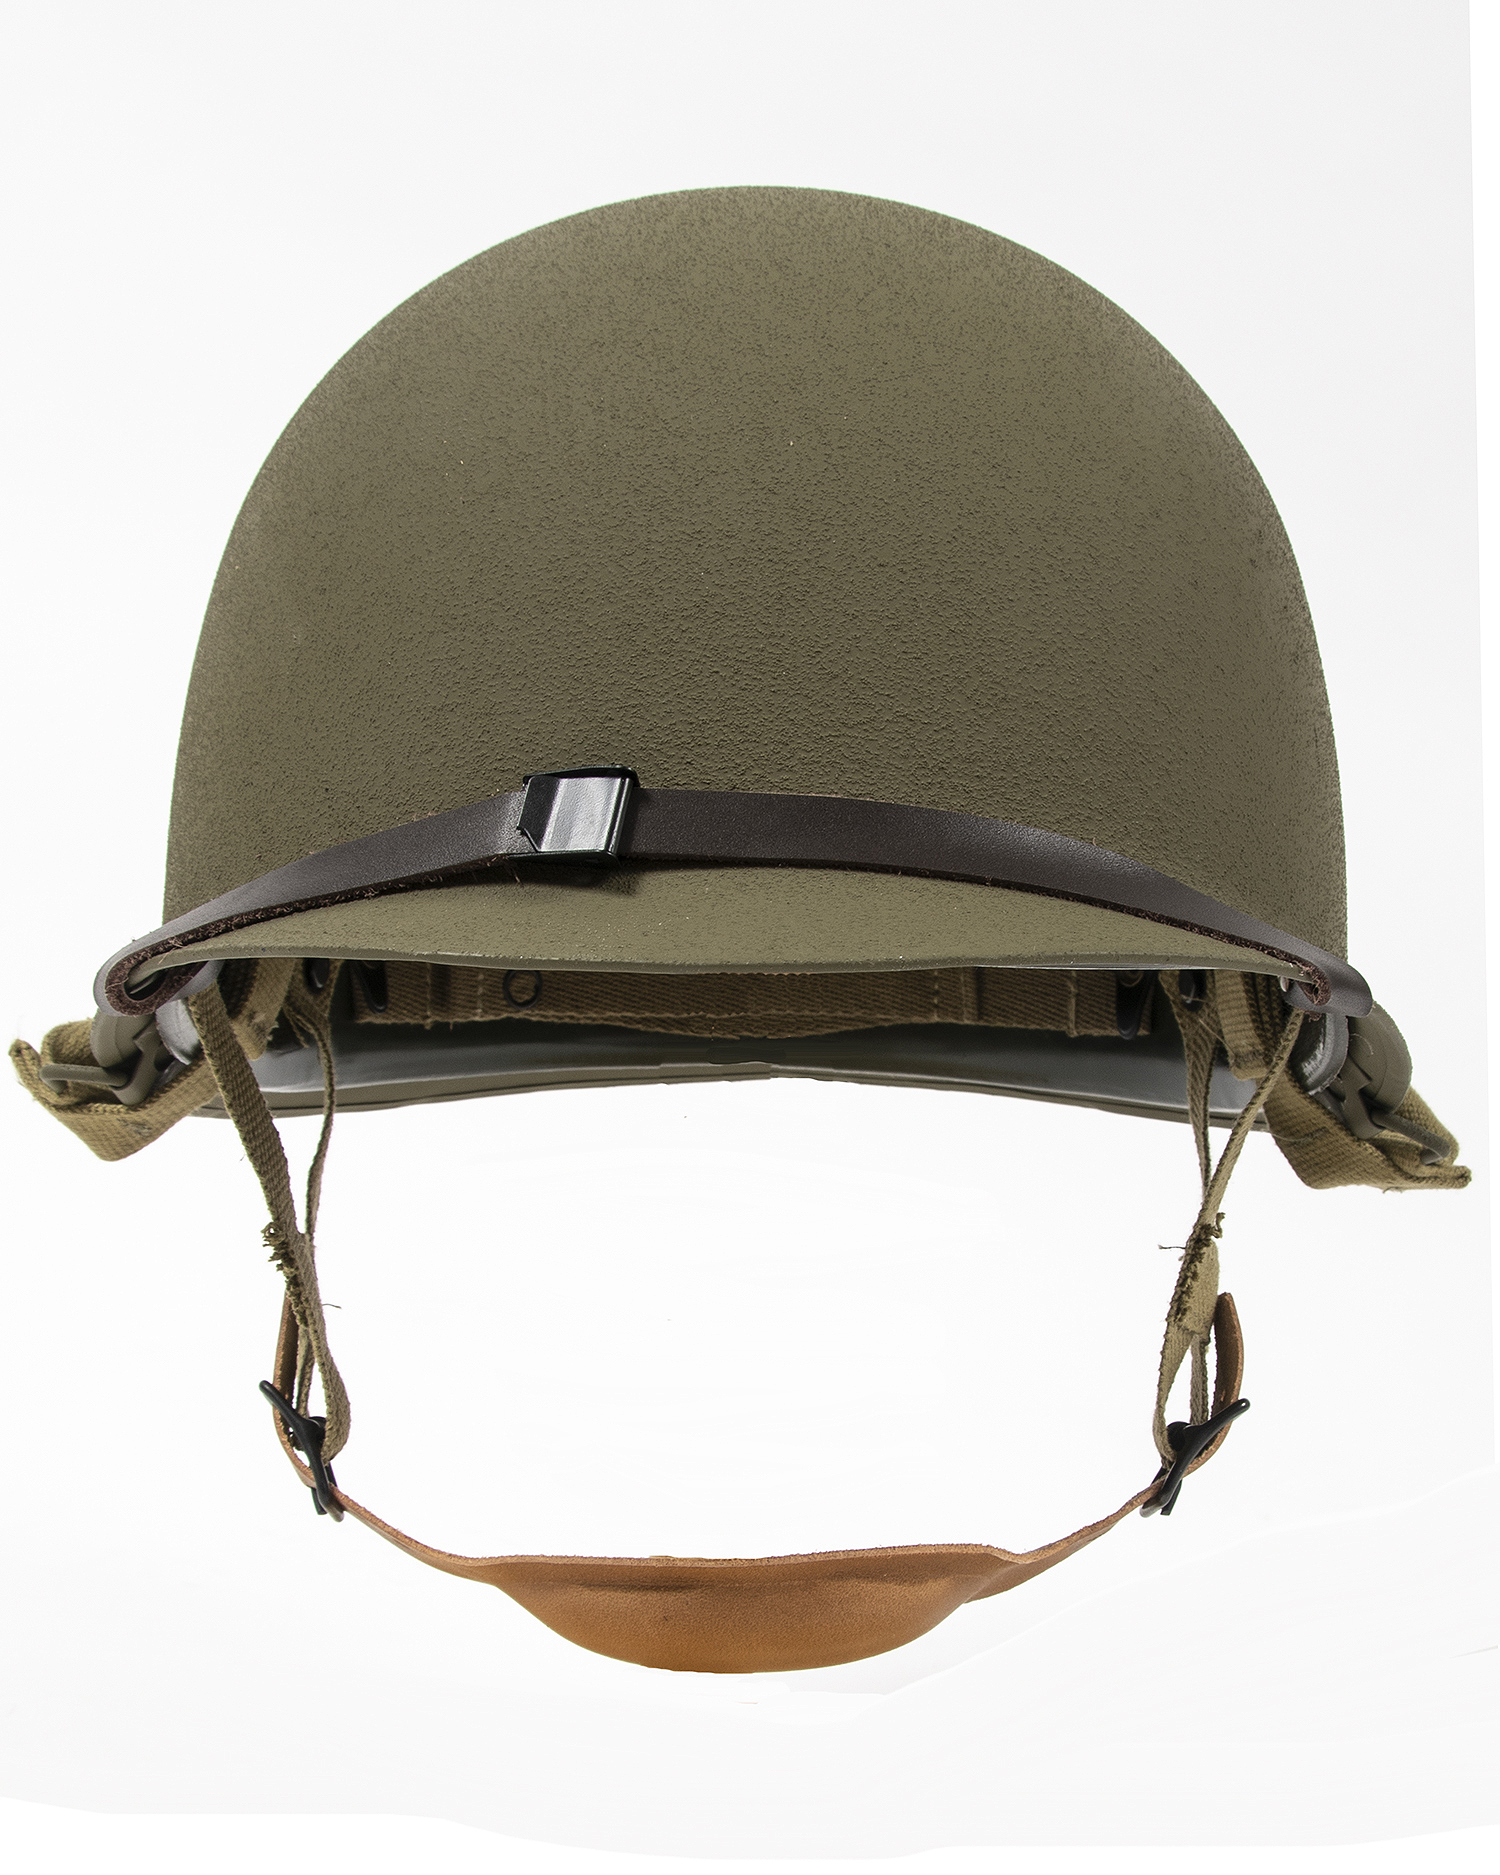 Reproduction US WWII Paratrooper Helmet